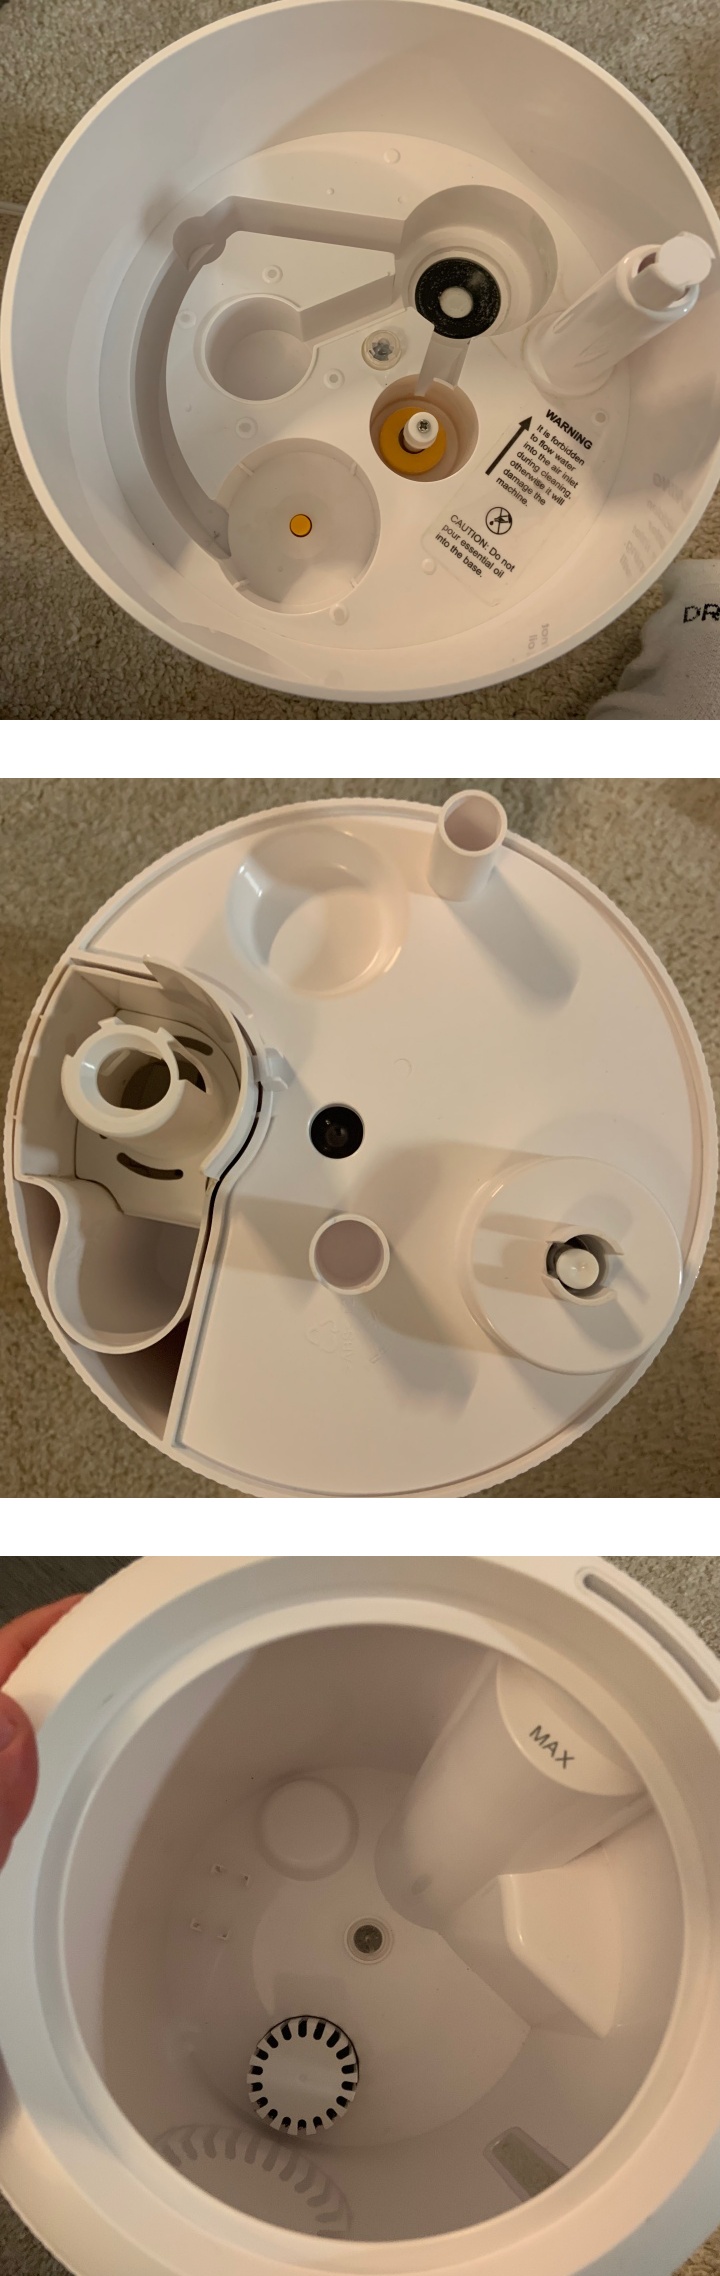 A Bad Humidifier